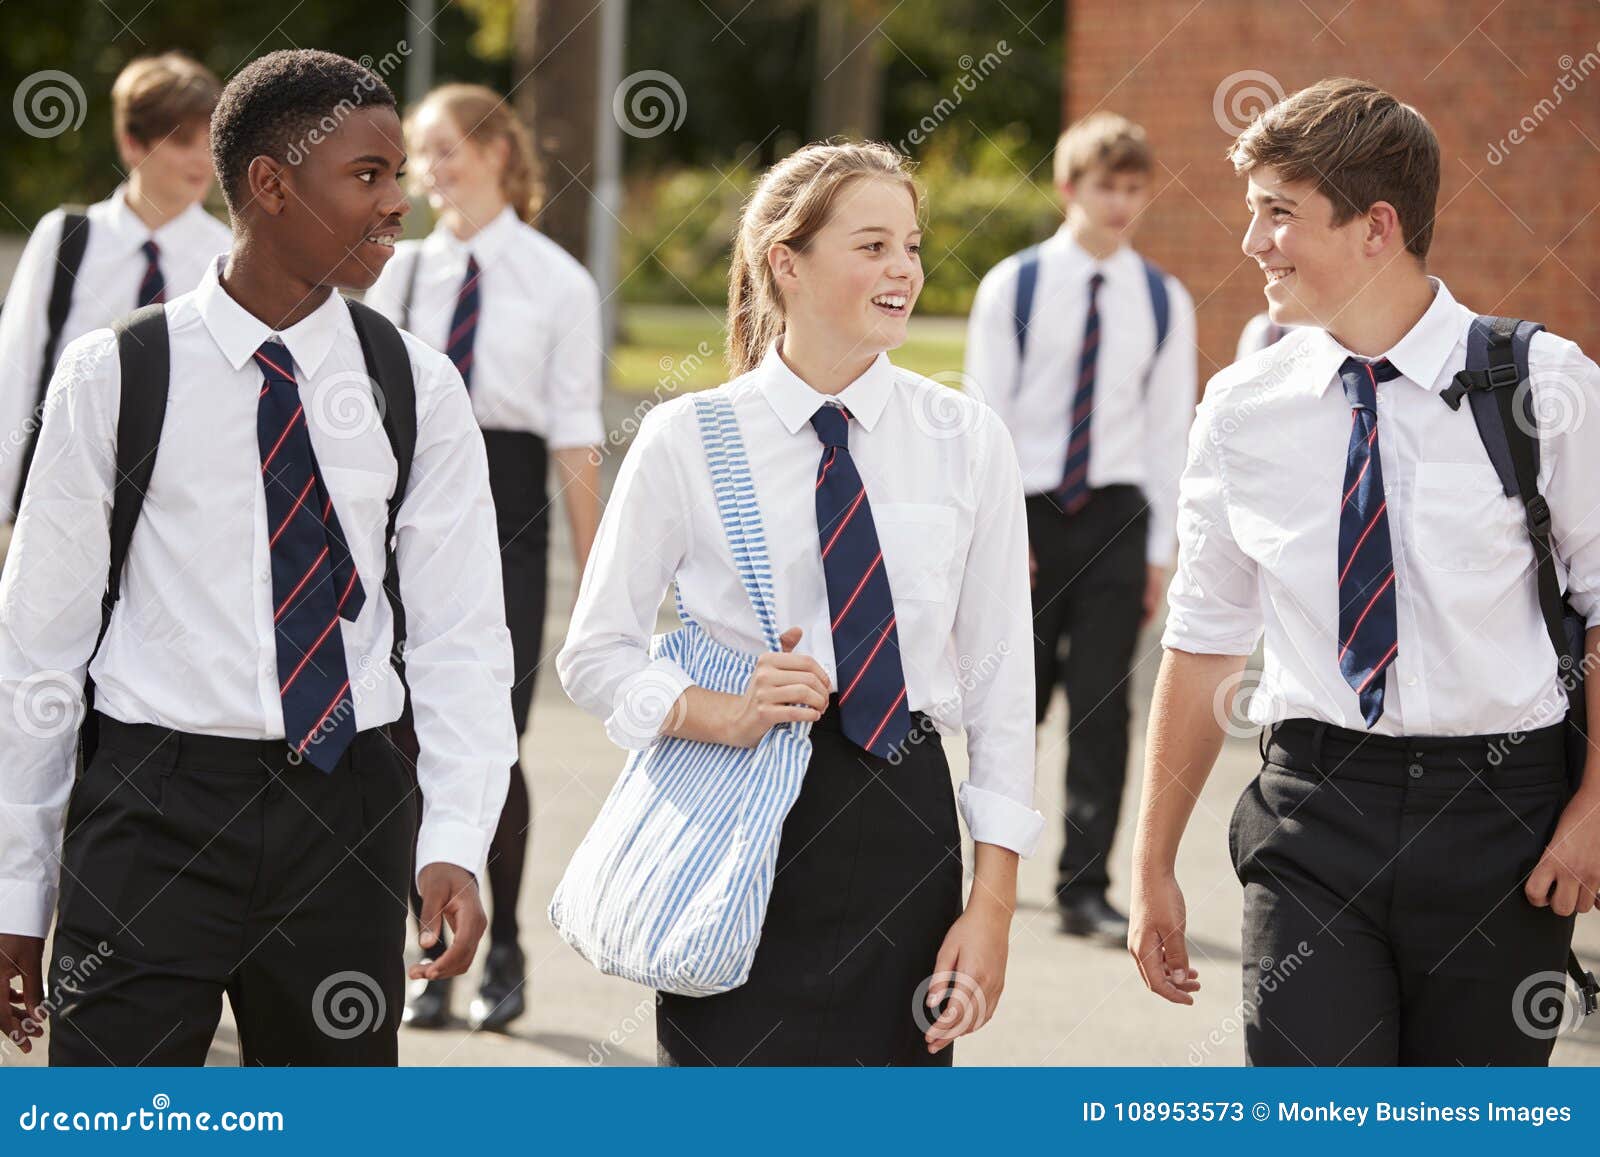 group of teenage students in uniform outside school buildings